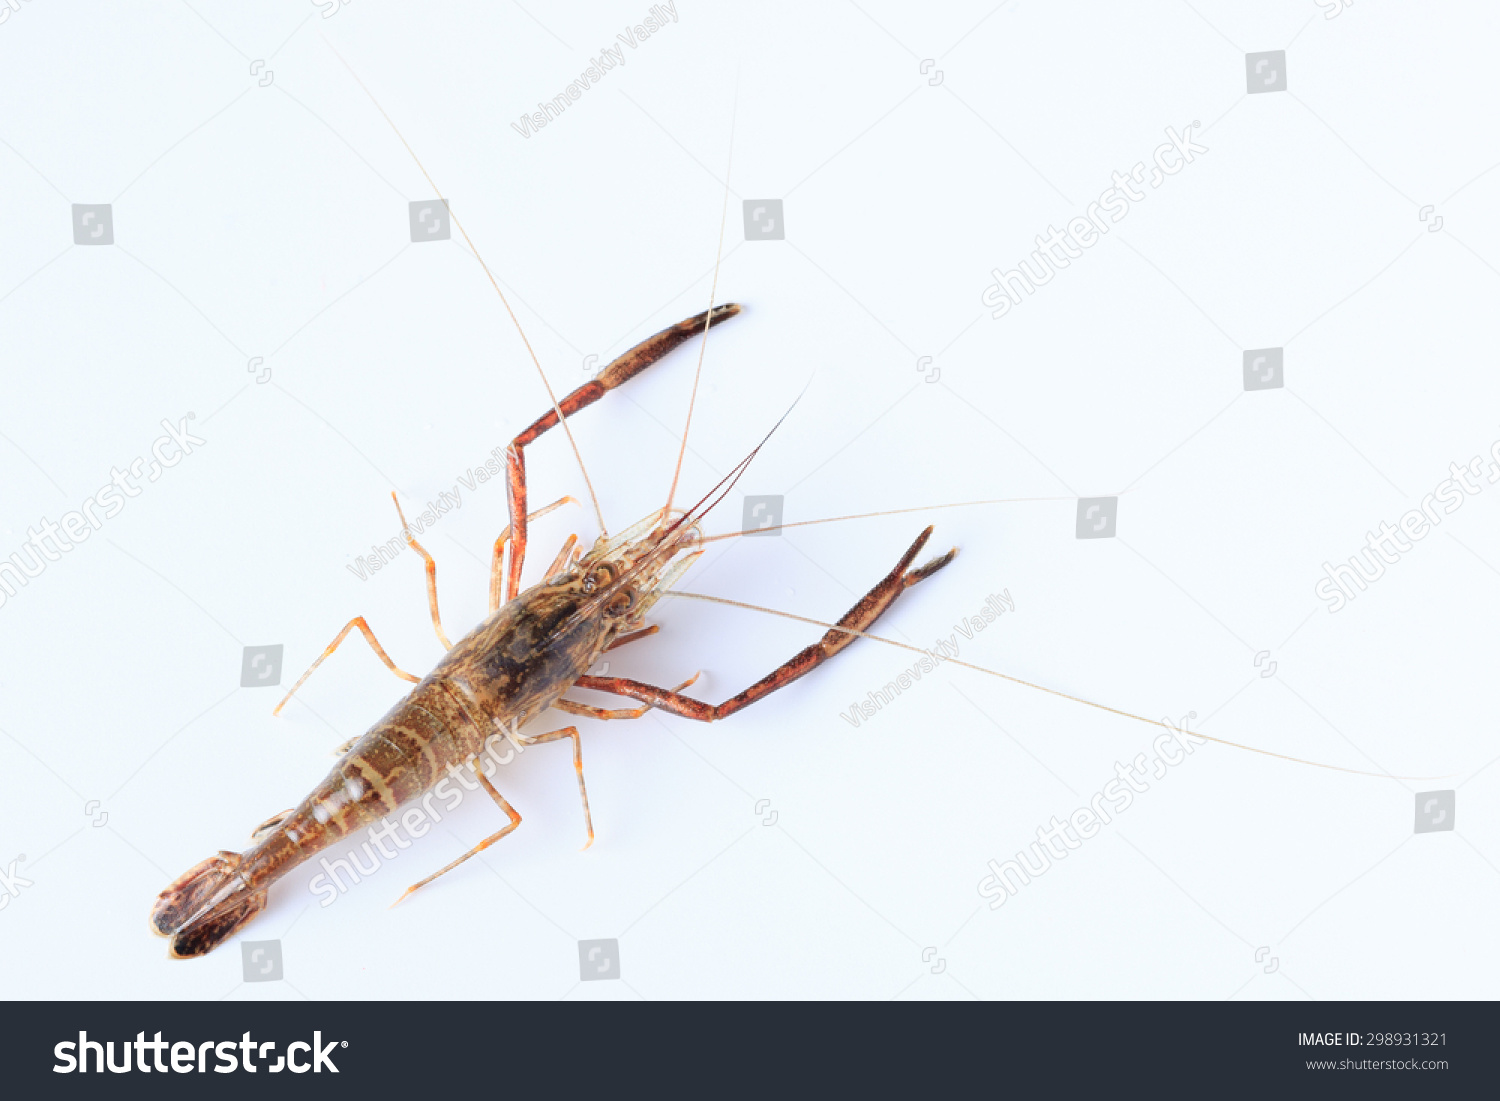 stock-photo-macrobrachium-nipponense-shrimp-introduced-species-denisovo-ryazan-region-pronsky-area-russia-298931321.jpg